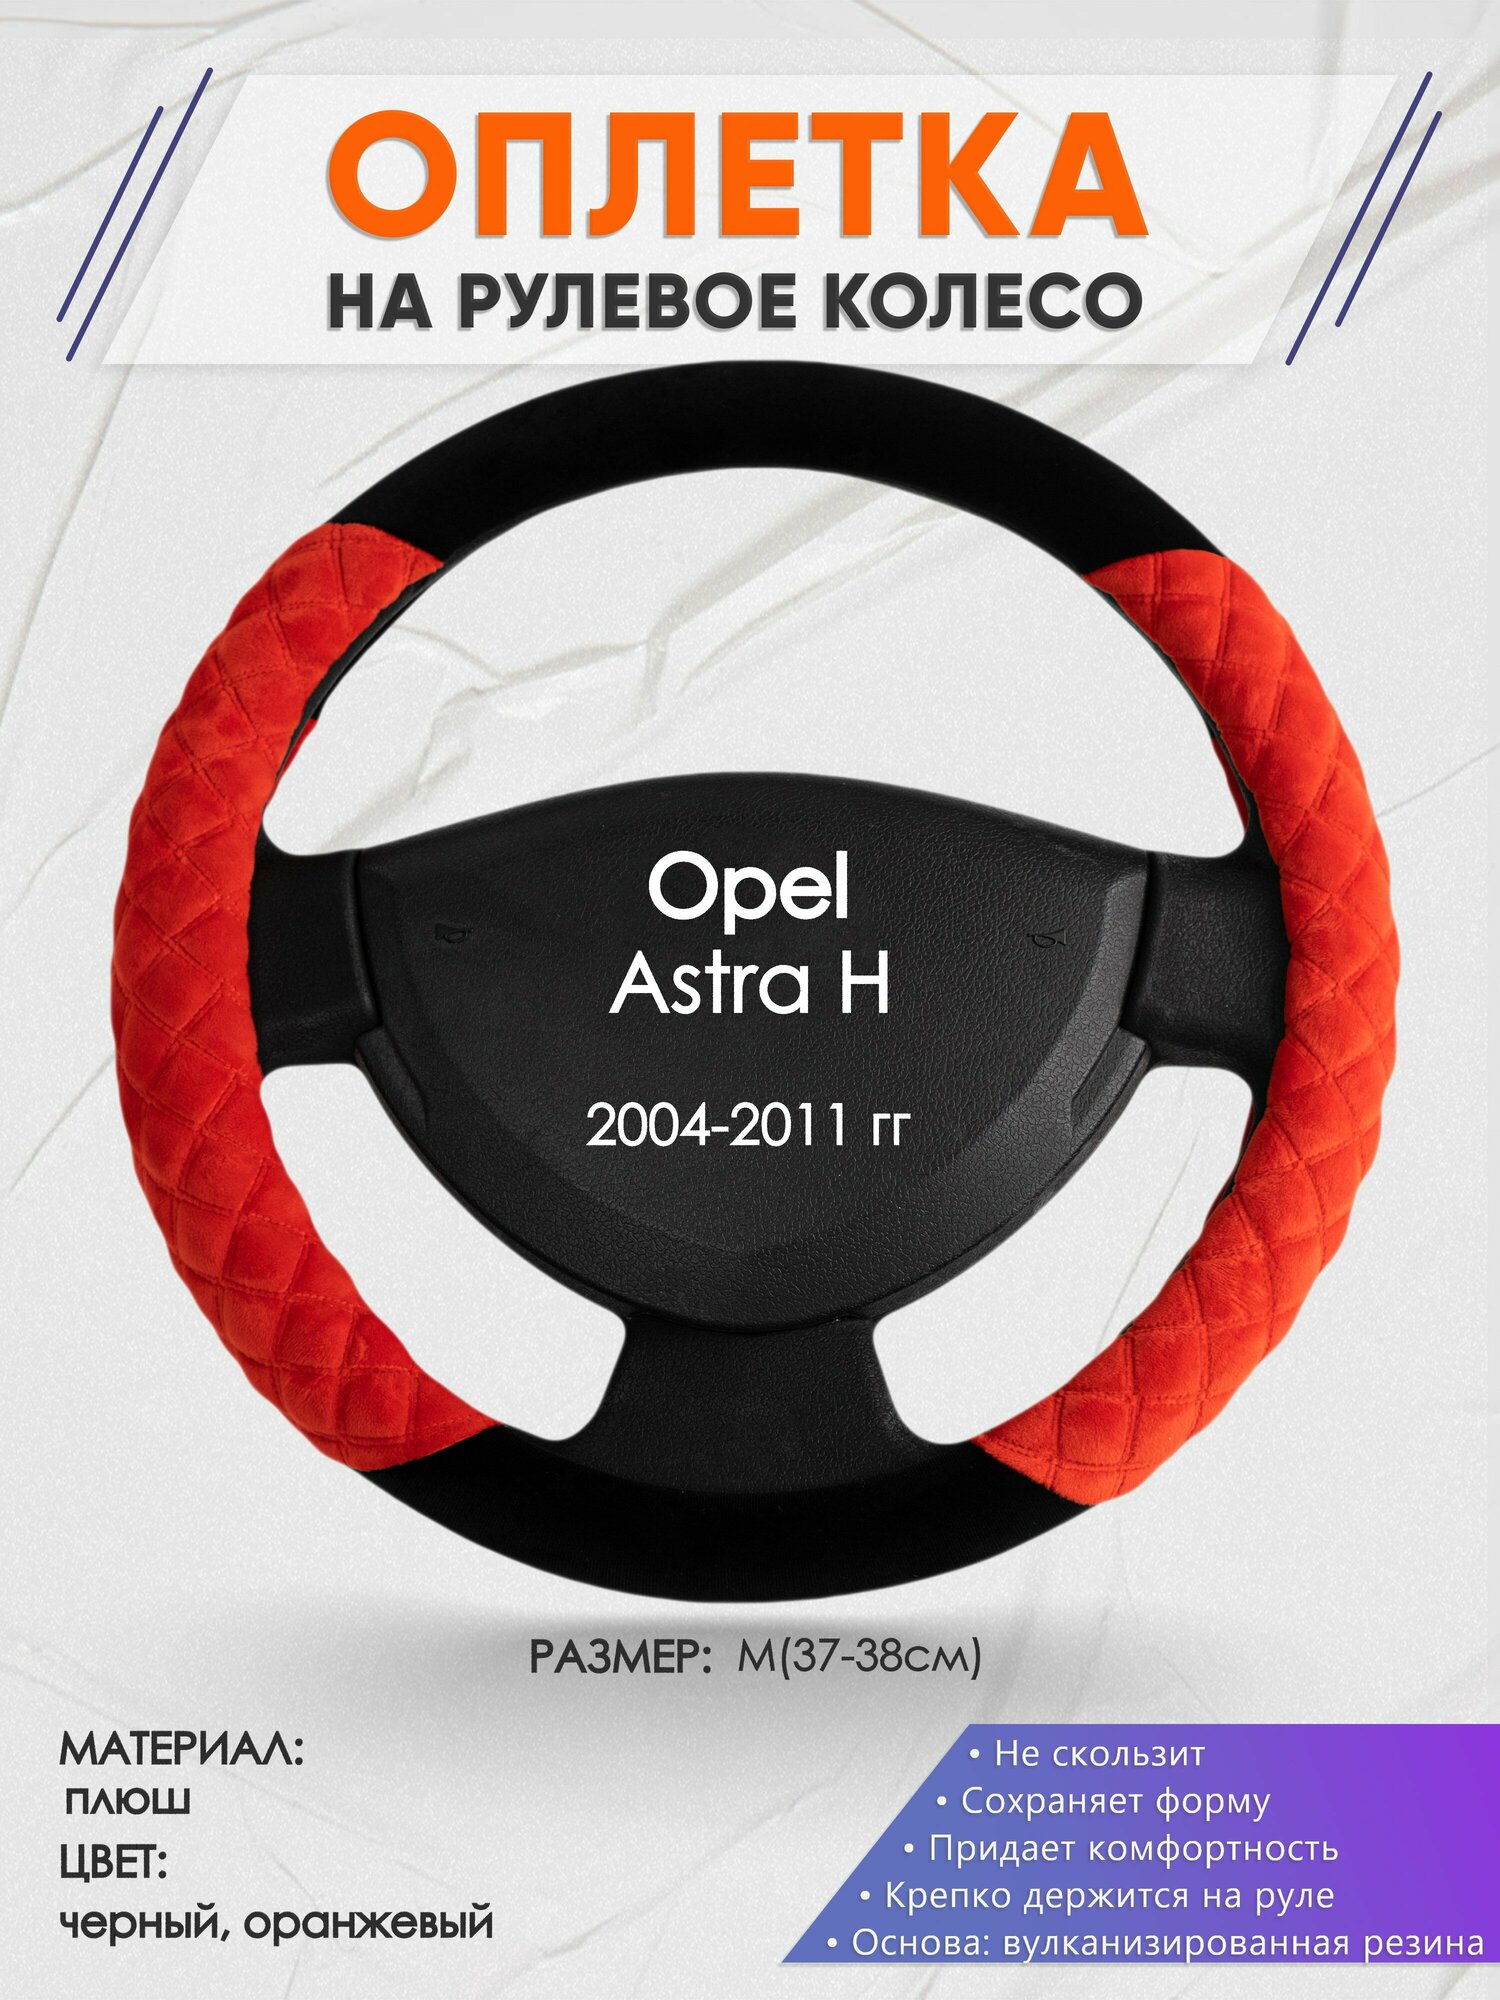 Оплетка на руль для Opel Astra H(Опель Астра Н) 2004-2011, M(37-38см), Замша 37